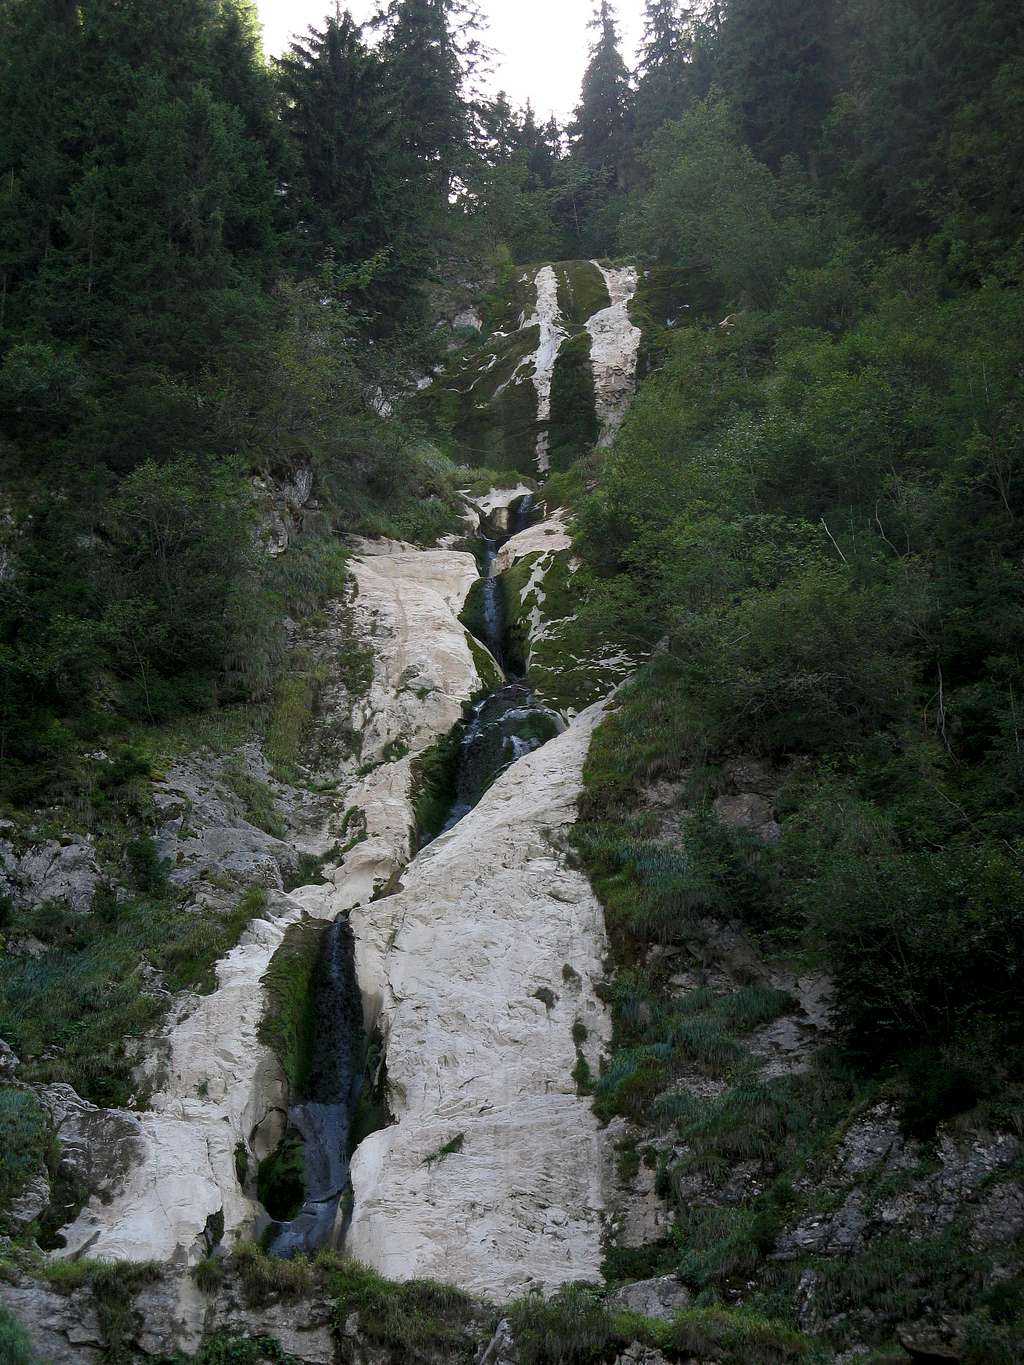 The Horses' waterfall